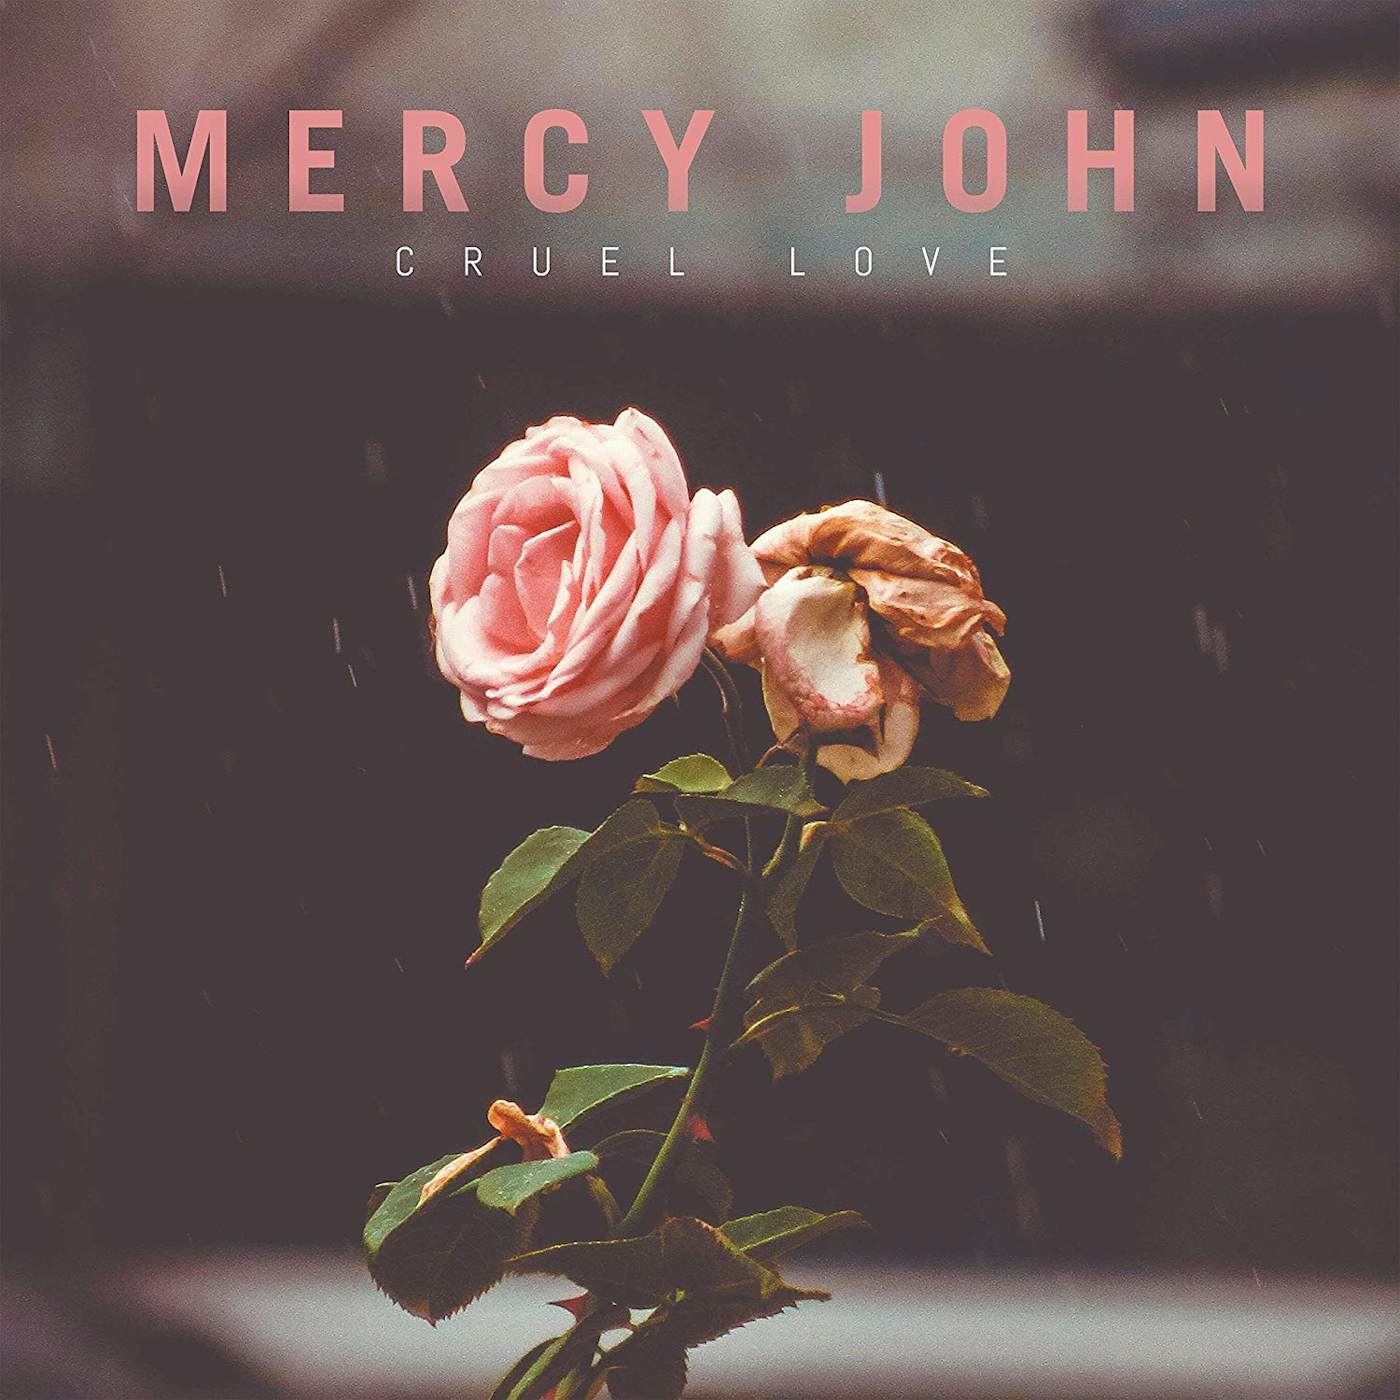 Mercy John Cruel love Vinyl Record